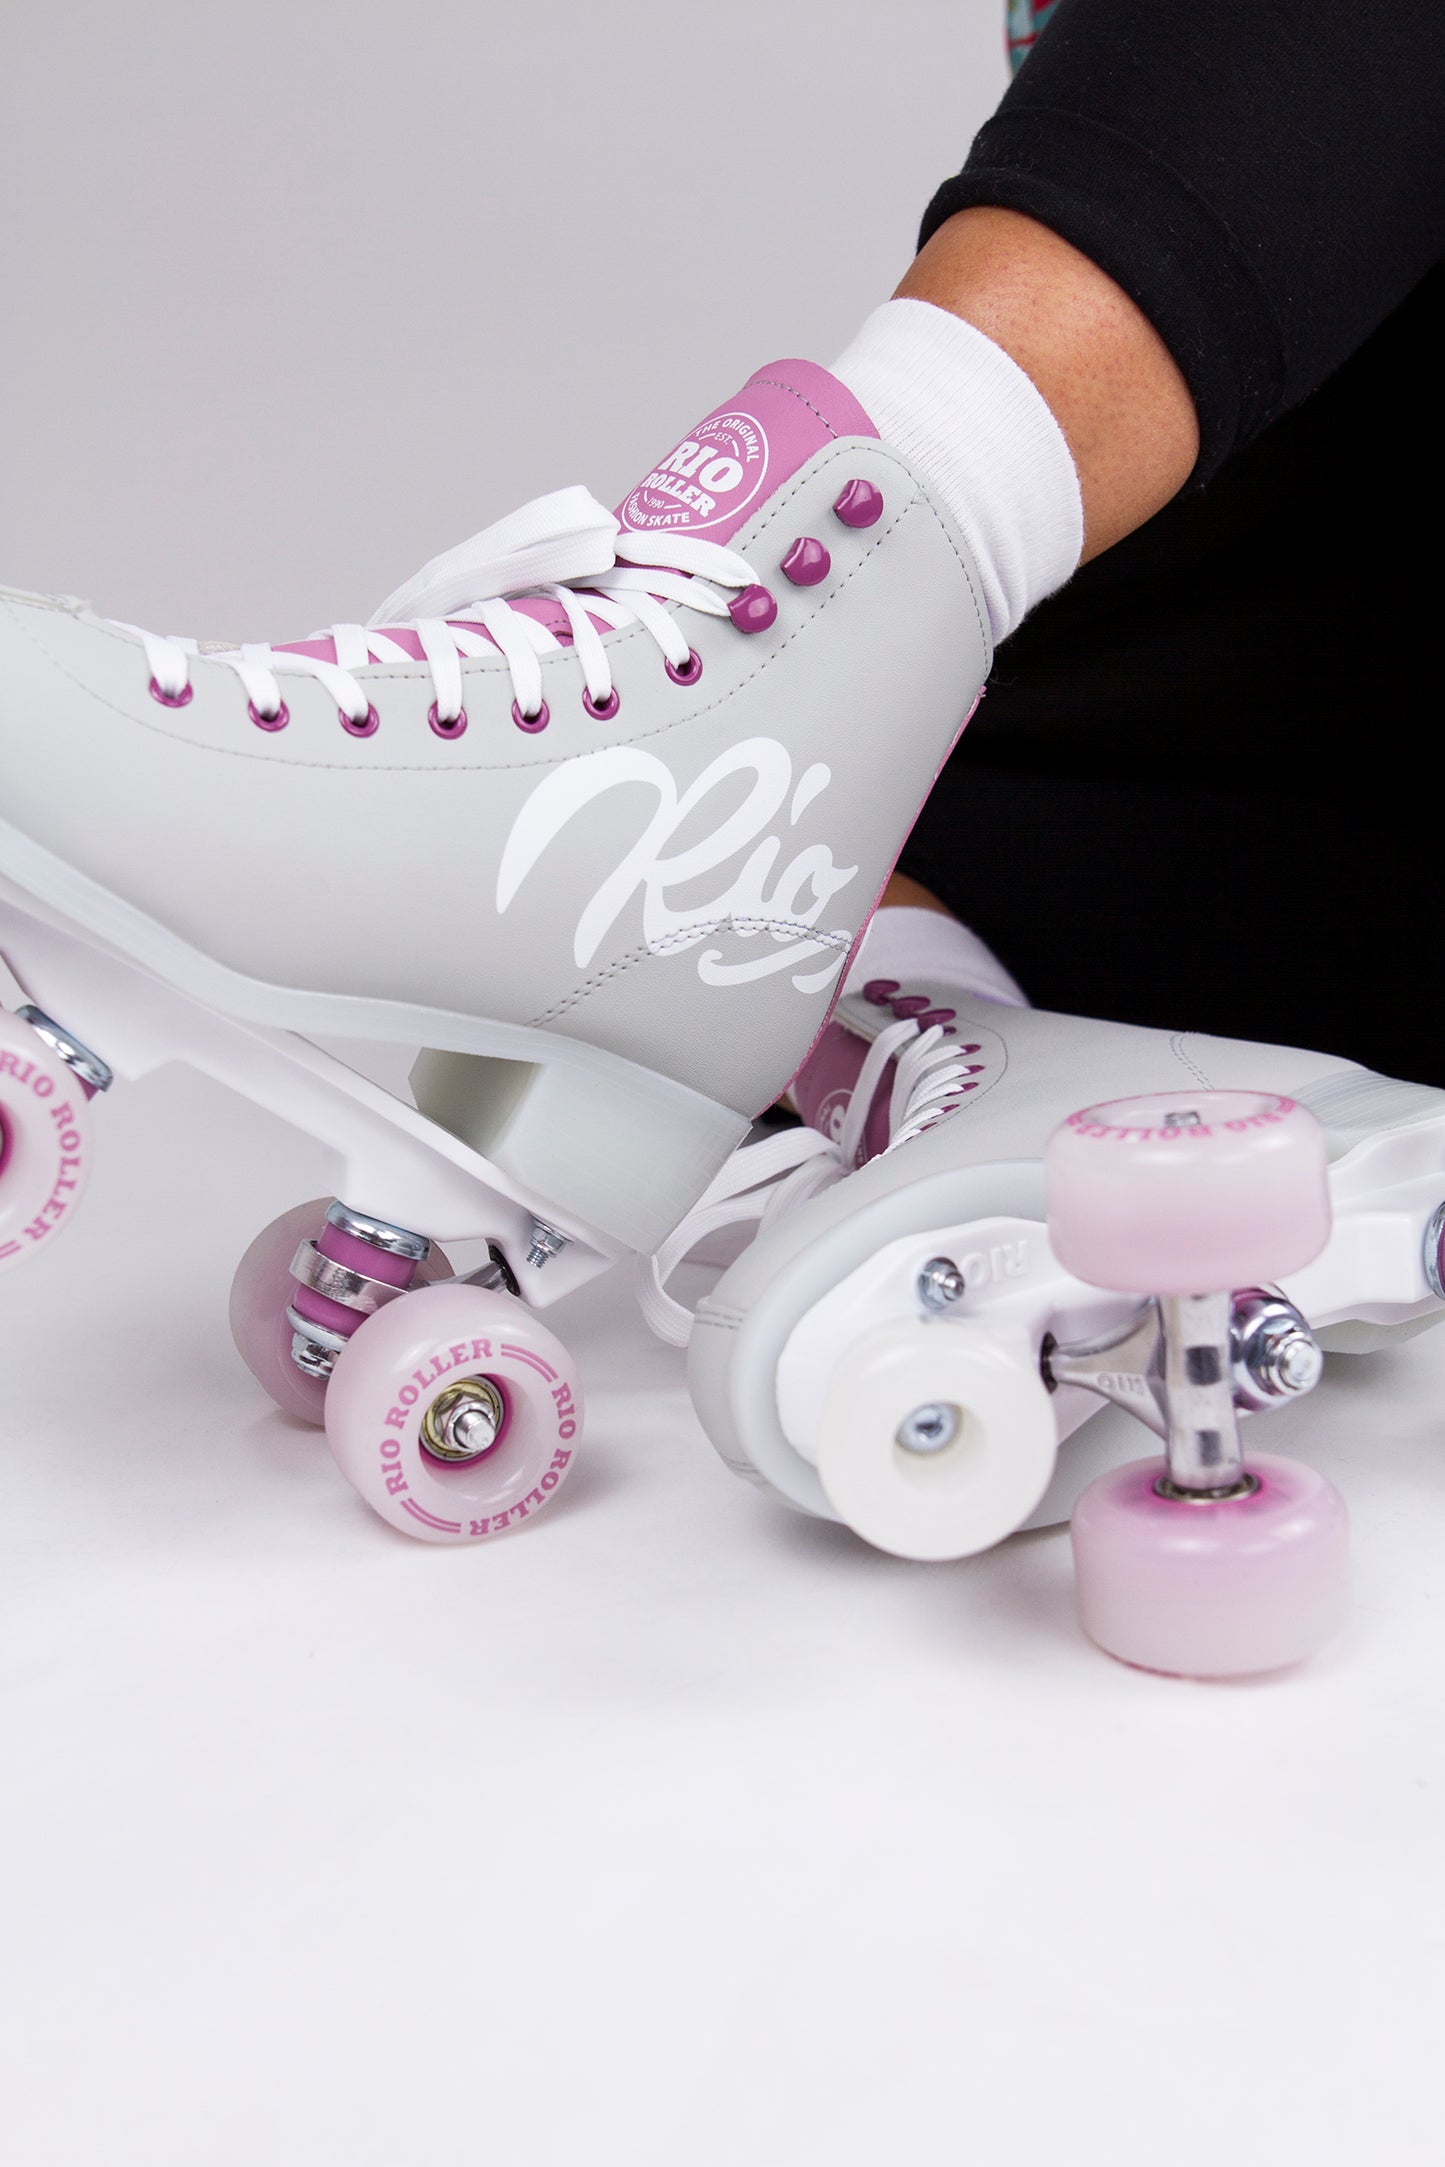 Rio Roller Script Quad Roller Skates - Grey/Purple - Momma Trucker Skates